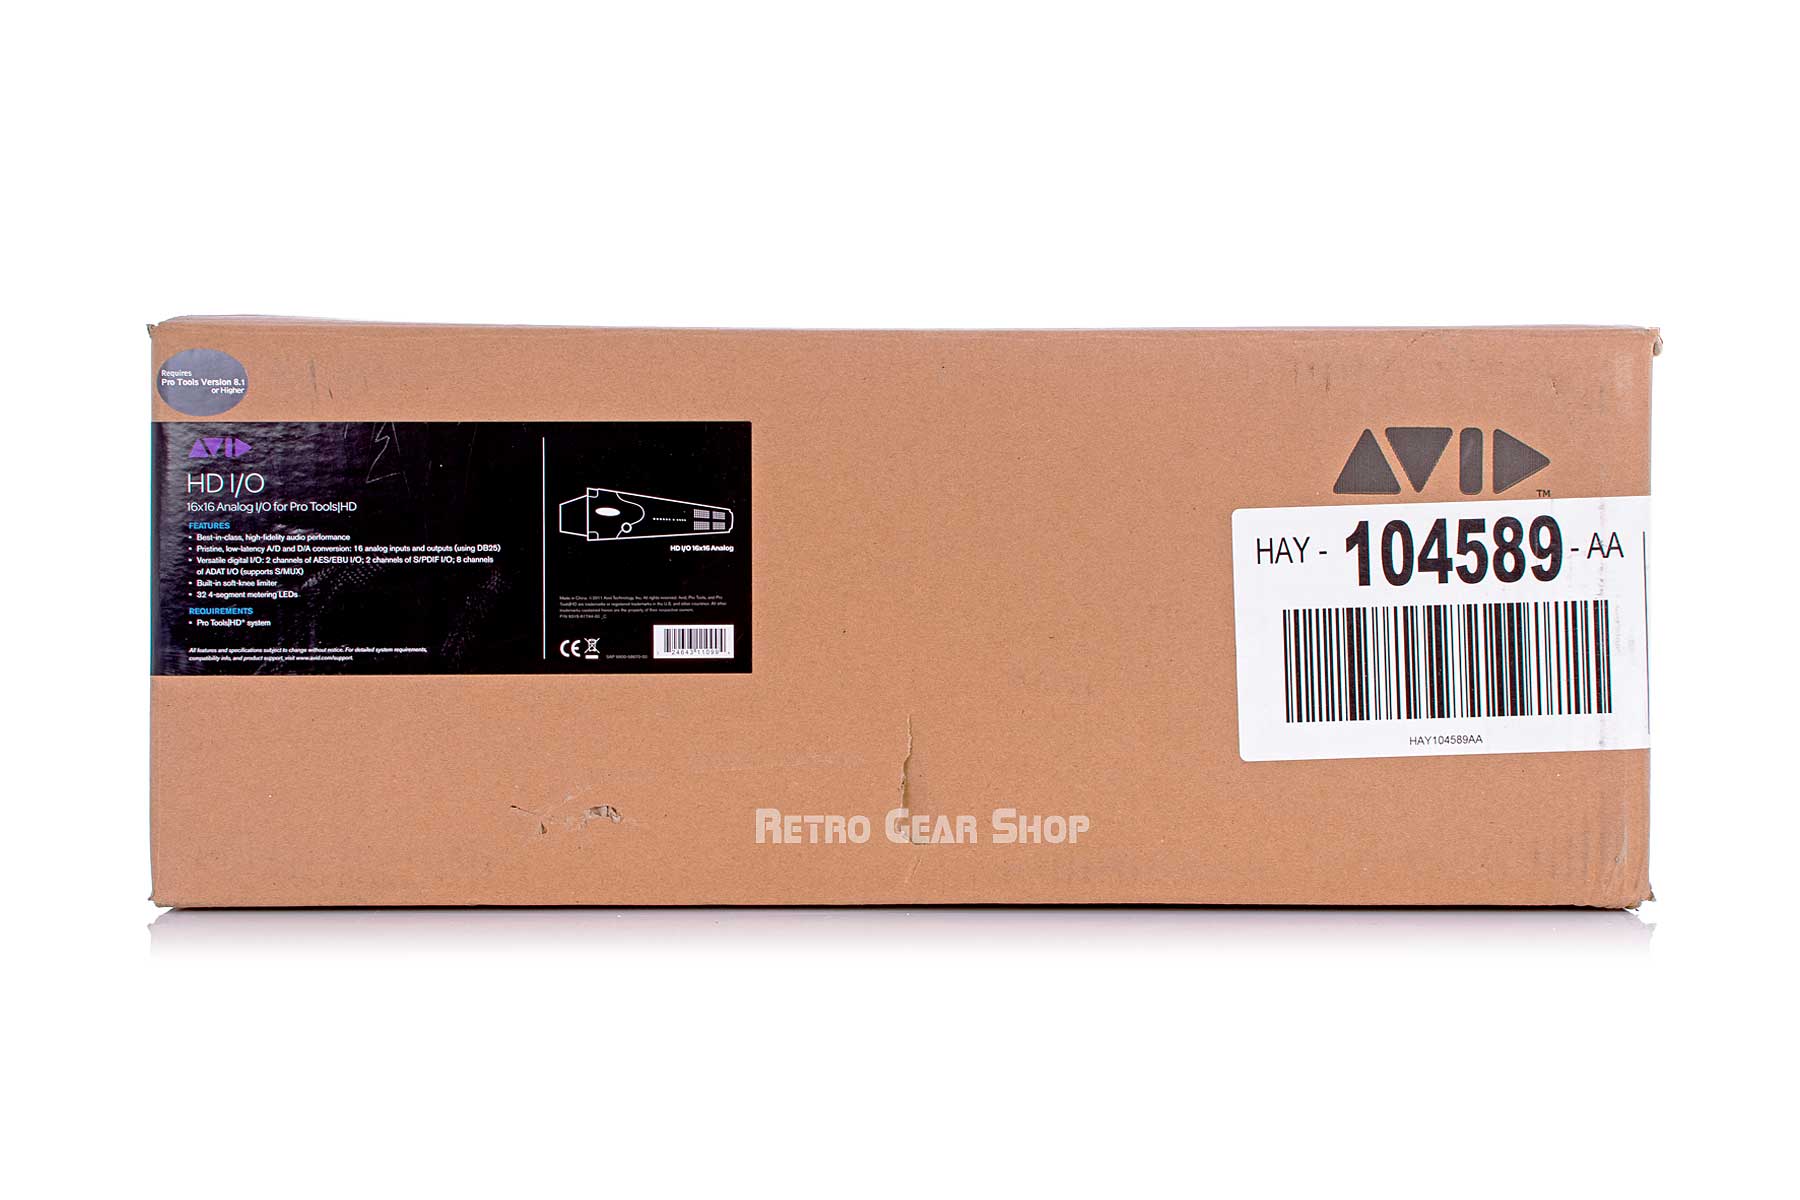 Avid HD I/O 16x16 Analog Box